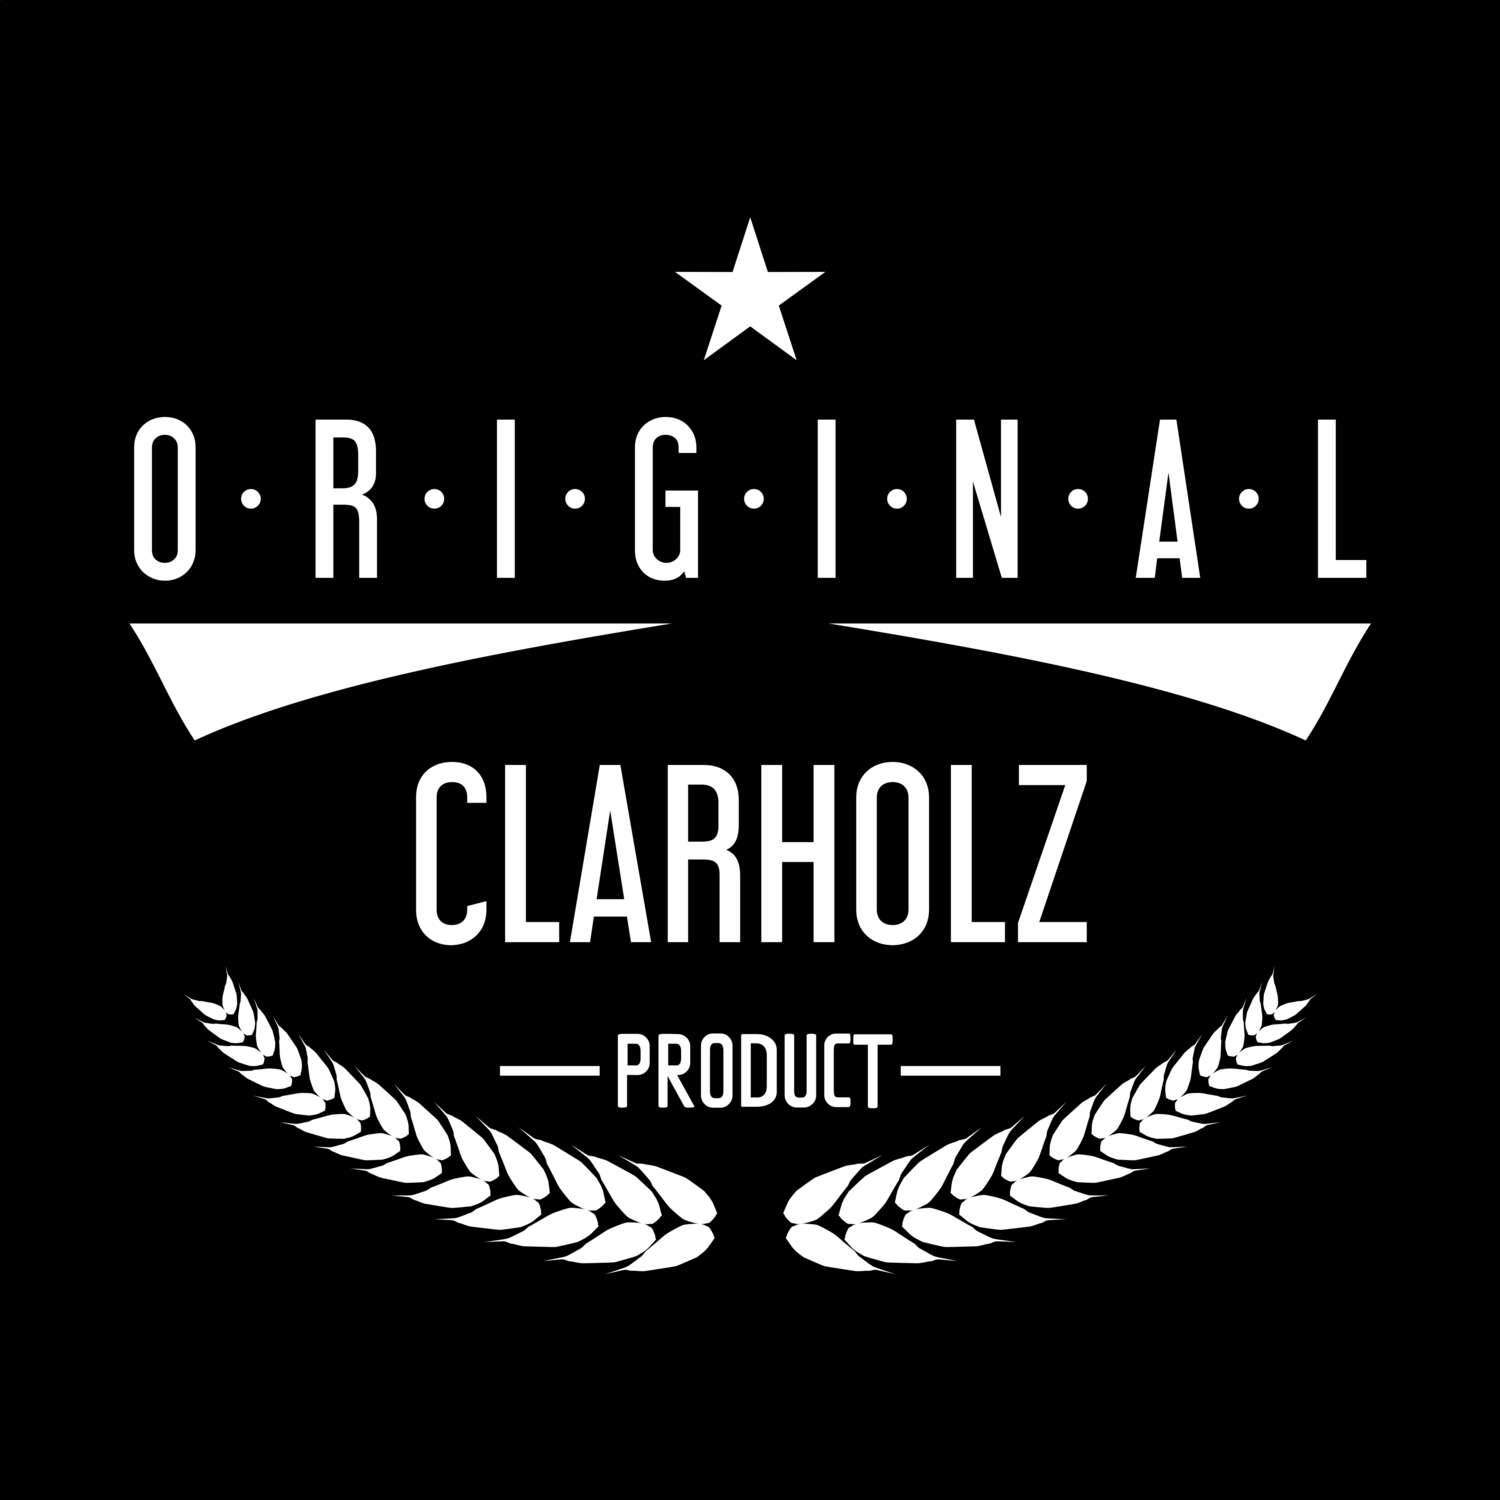 Clarholz T-Shirt »Original Product«